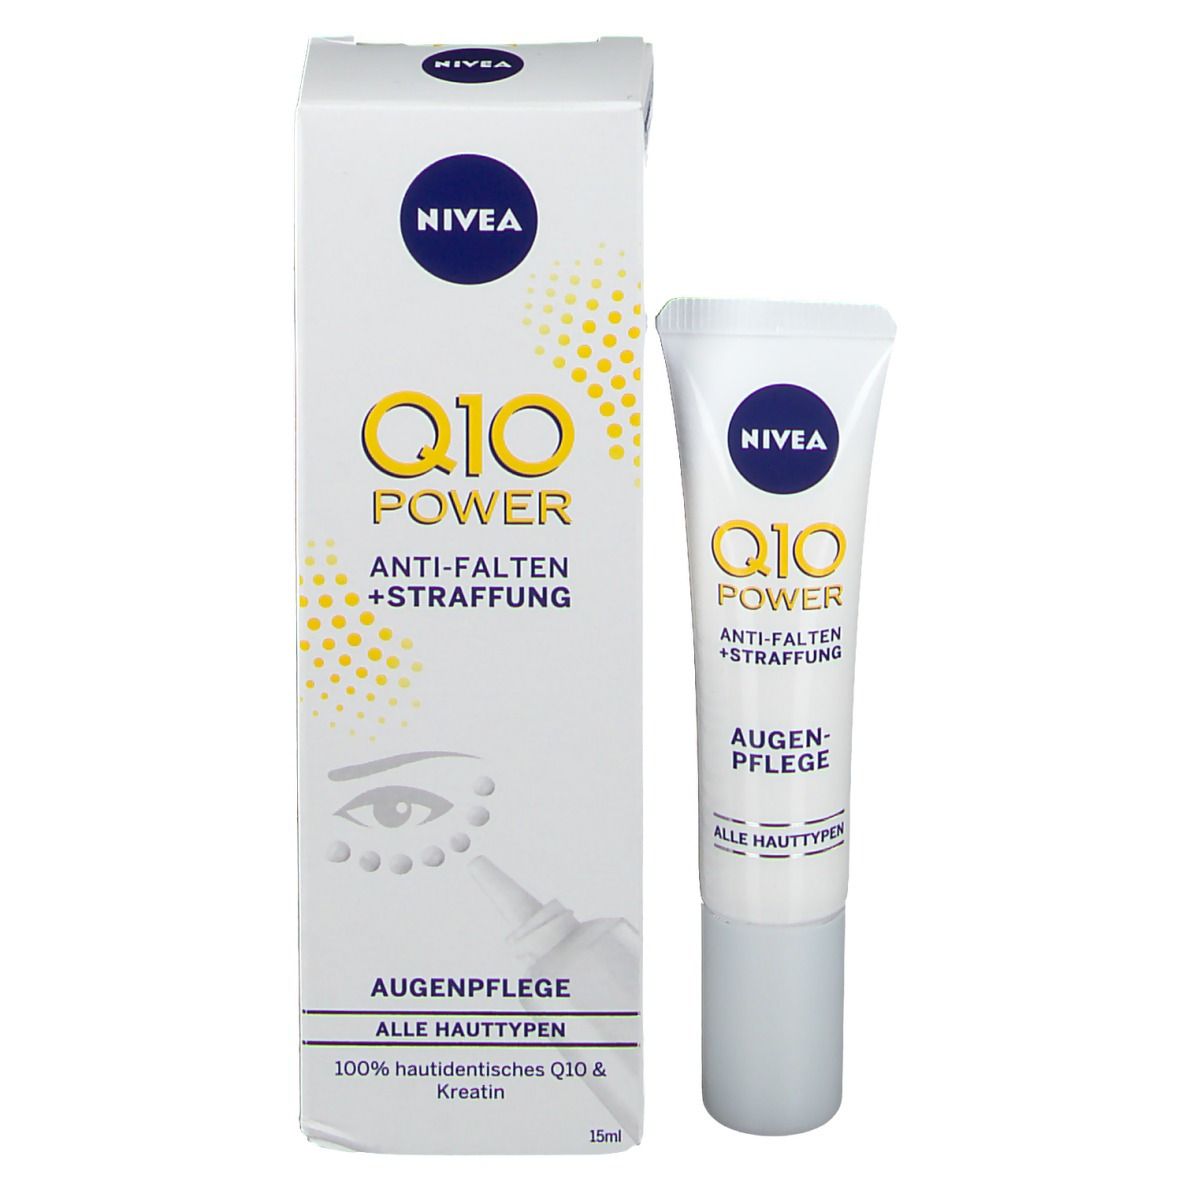 NIVEA® Q10 Power Anti-Falten + Straffung Augenpflege